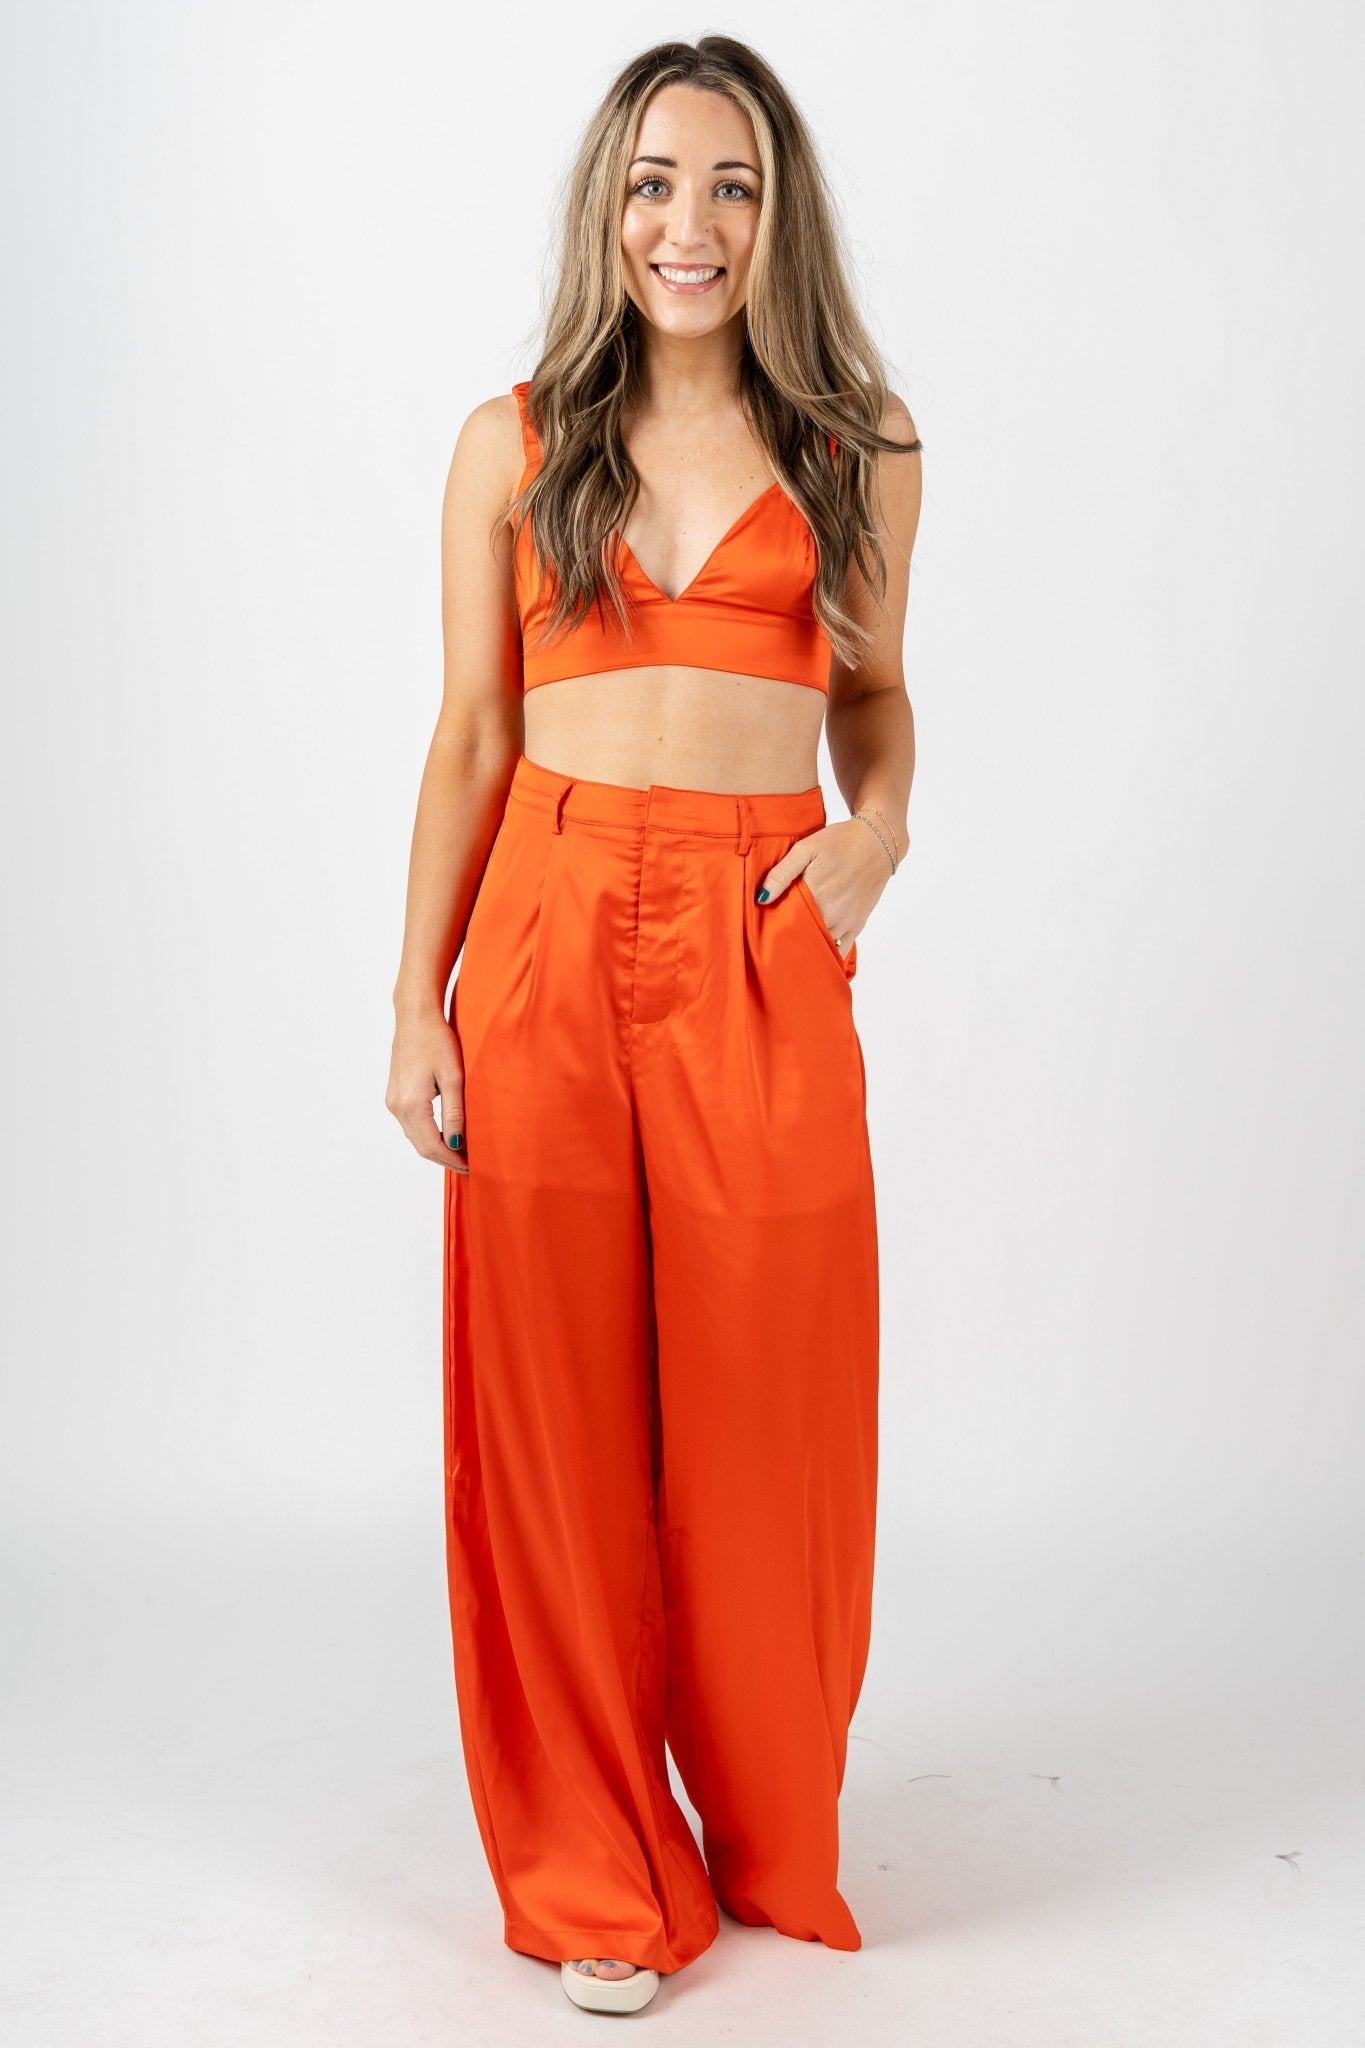 Satin cami tank top orange red - Trendy Top - Fashion Tank Tops at Lush Fashion Lounge Boutique in Oklahoma City